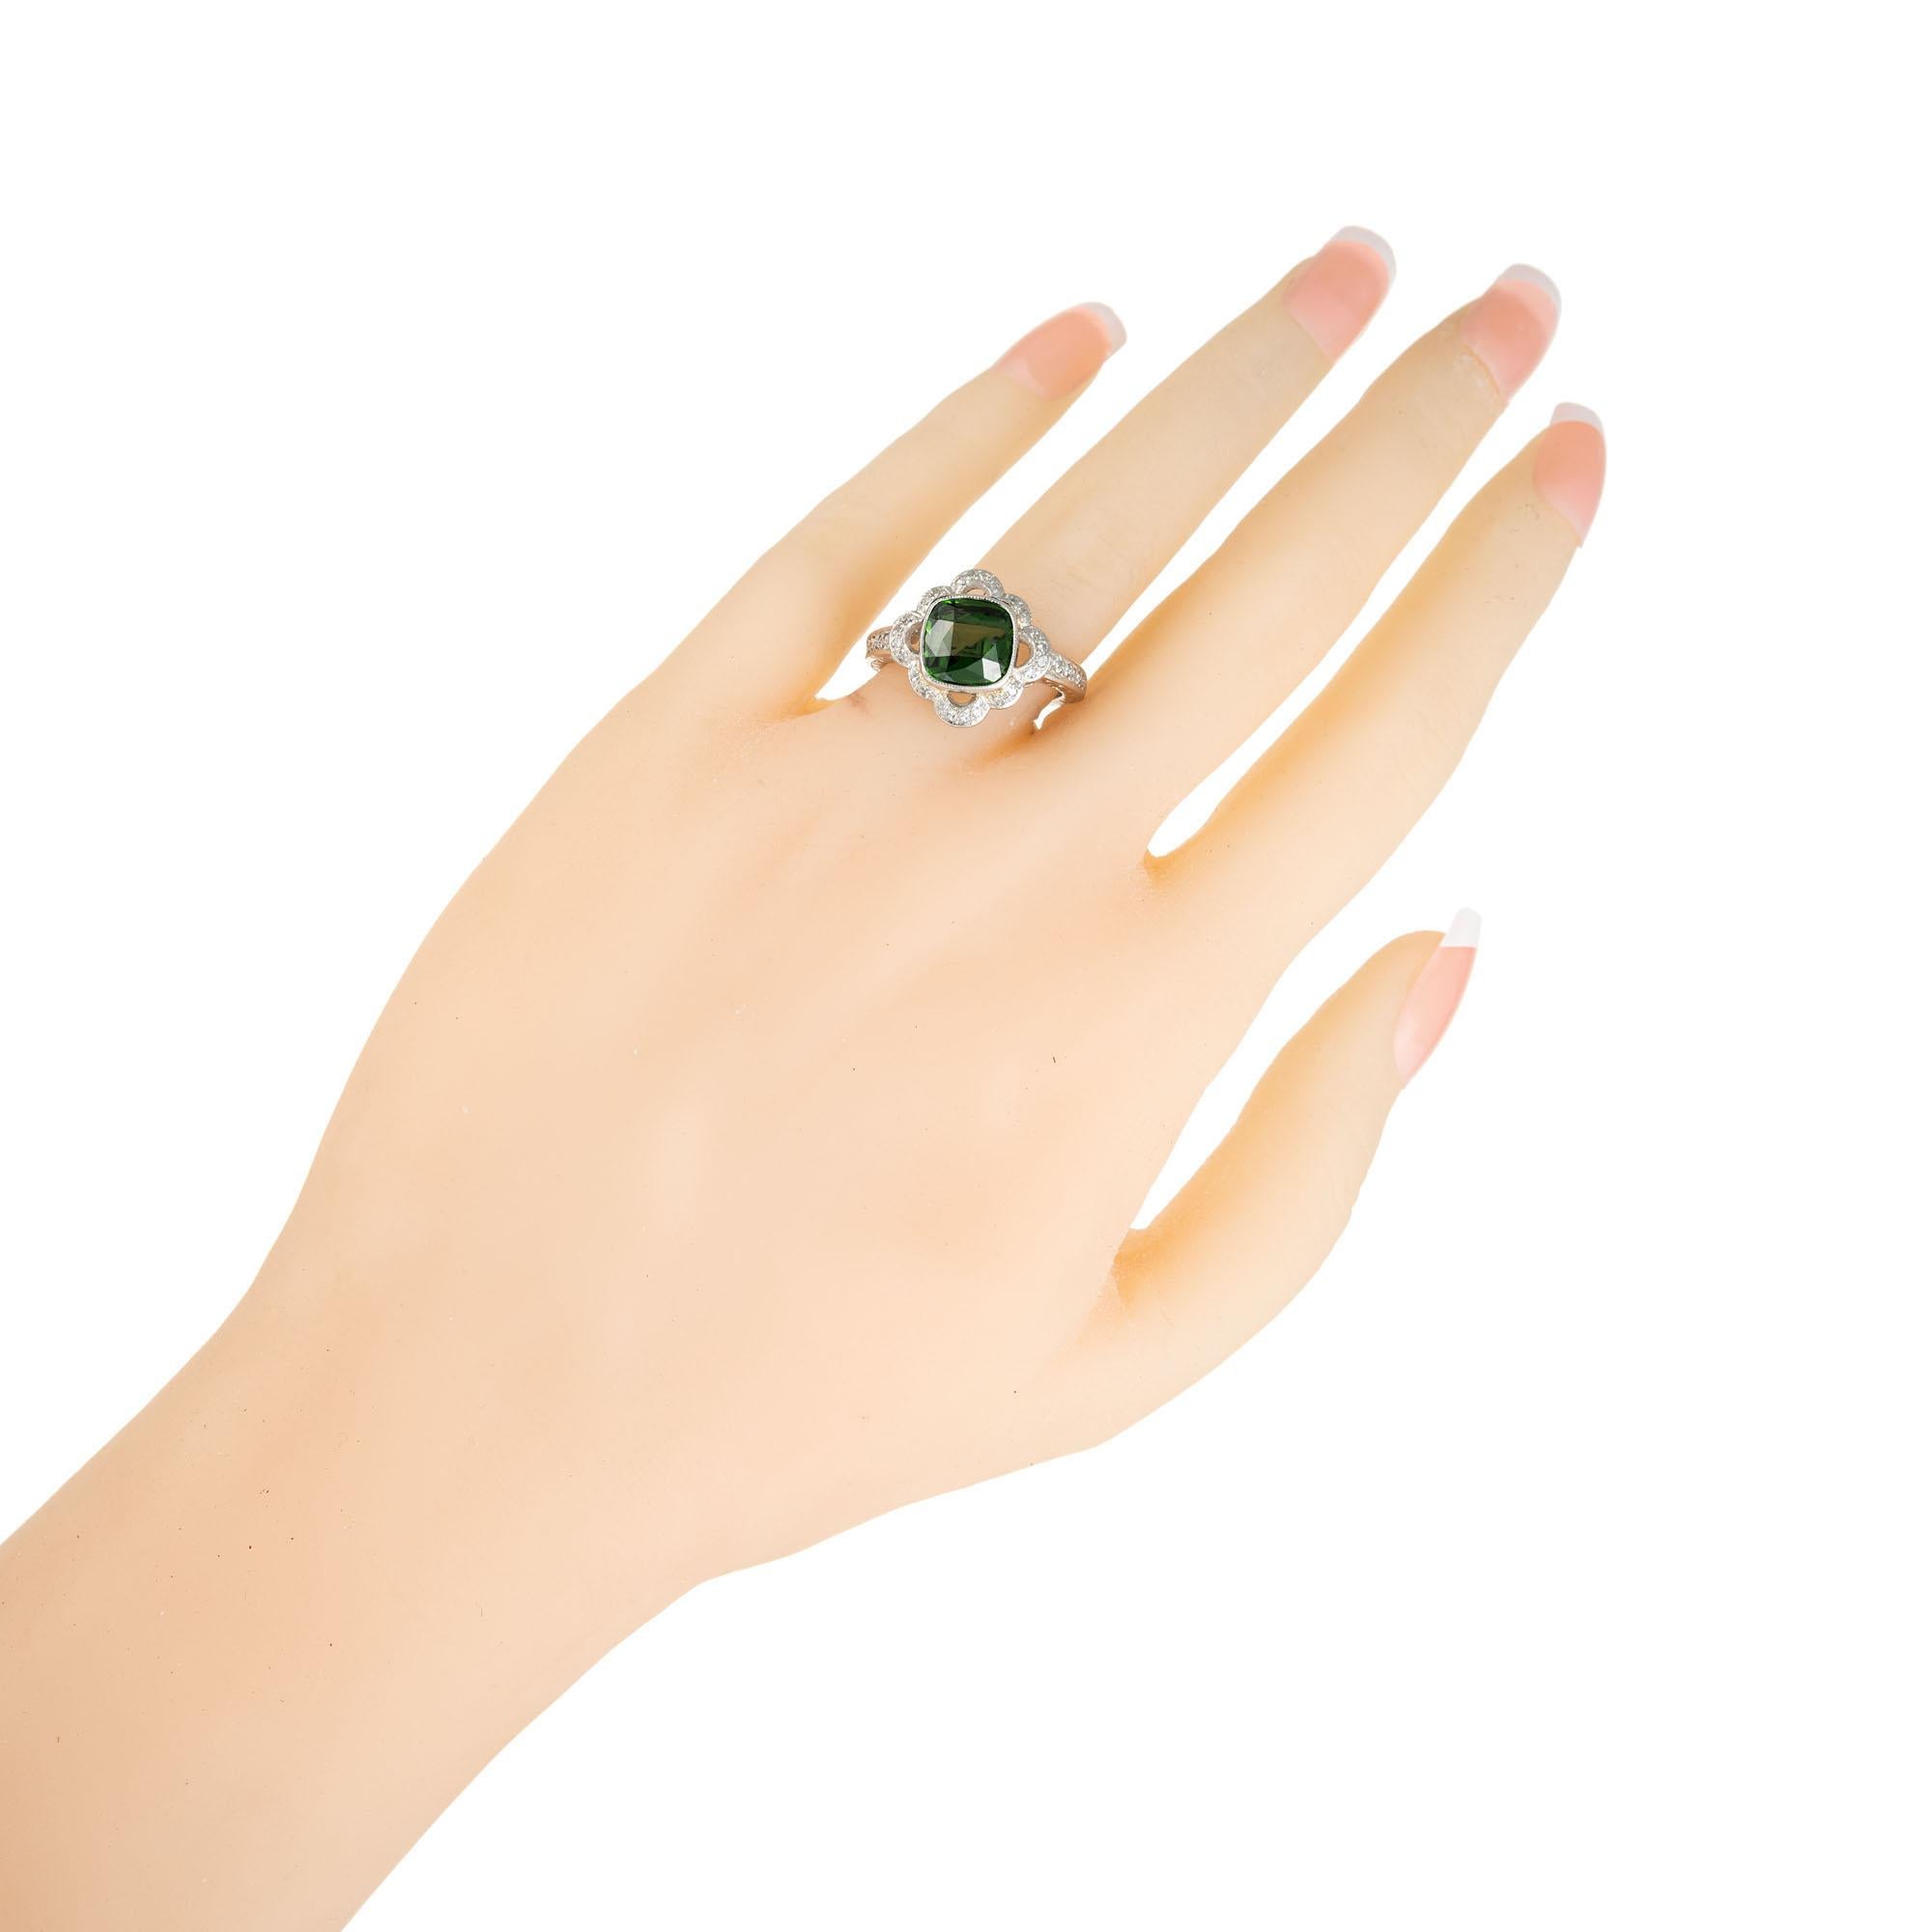 Platin-Verlobungsring mit GIA-zertifiziertem 3,46 Karat grünem Zirkon-Diamant im Angebot 2